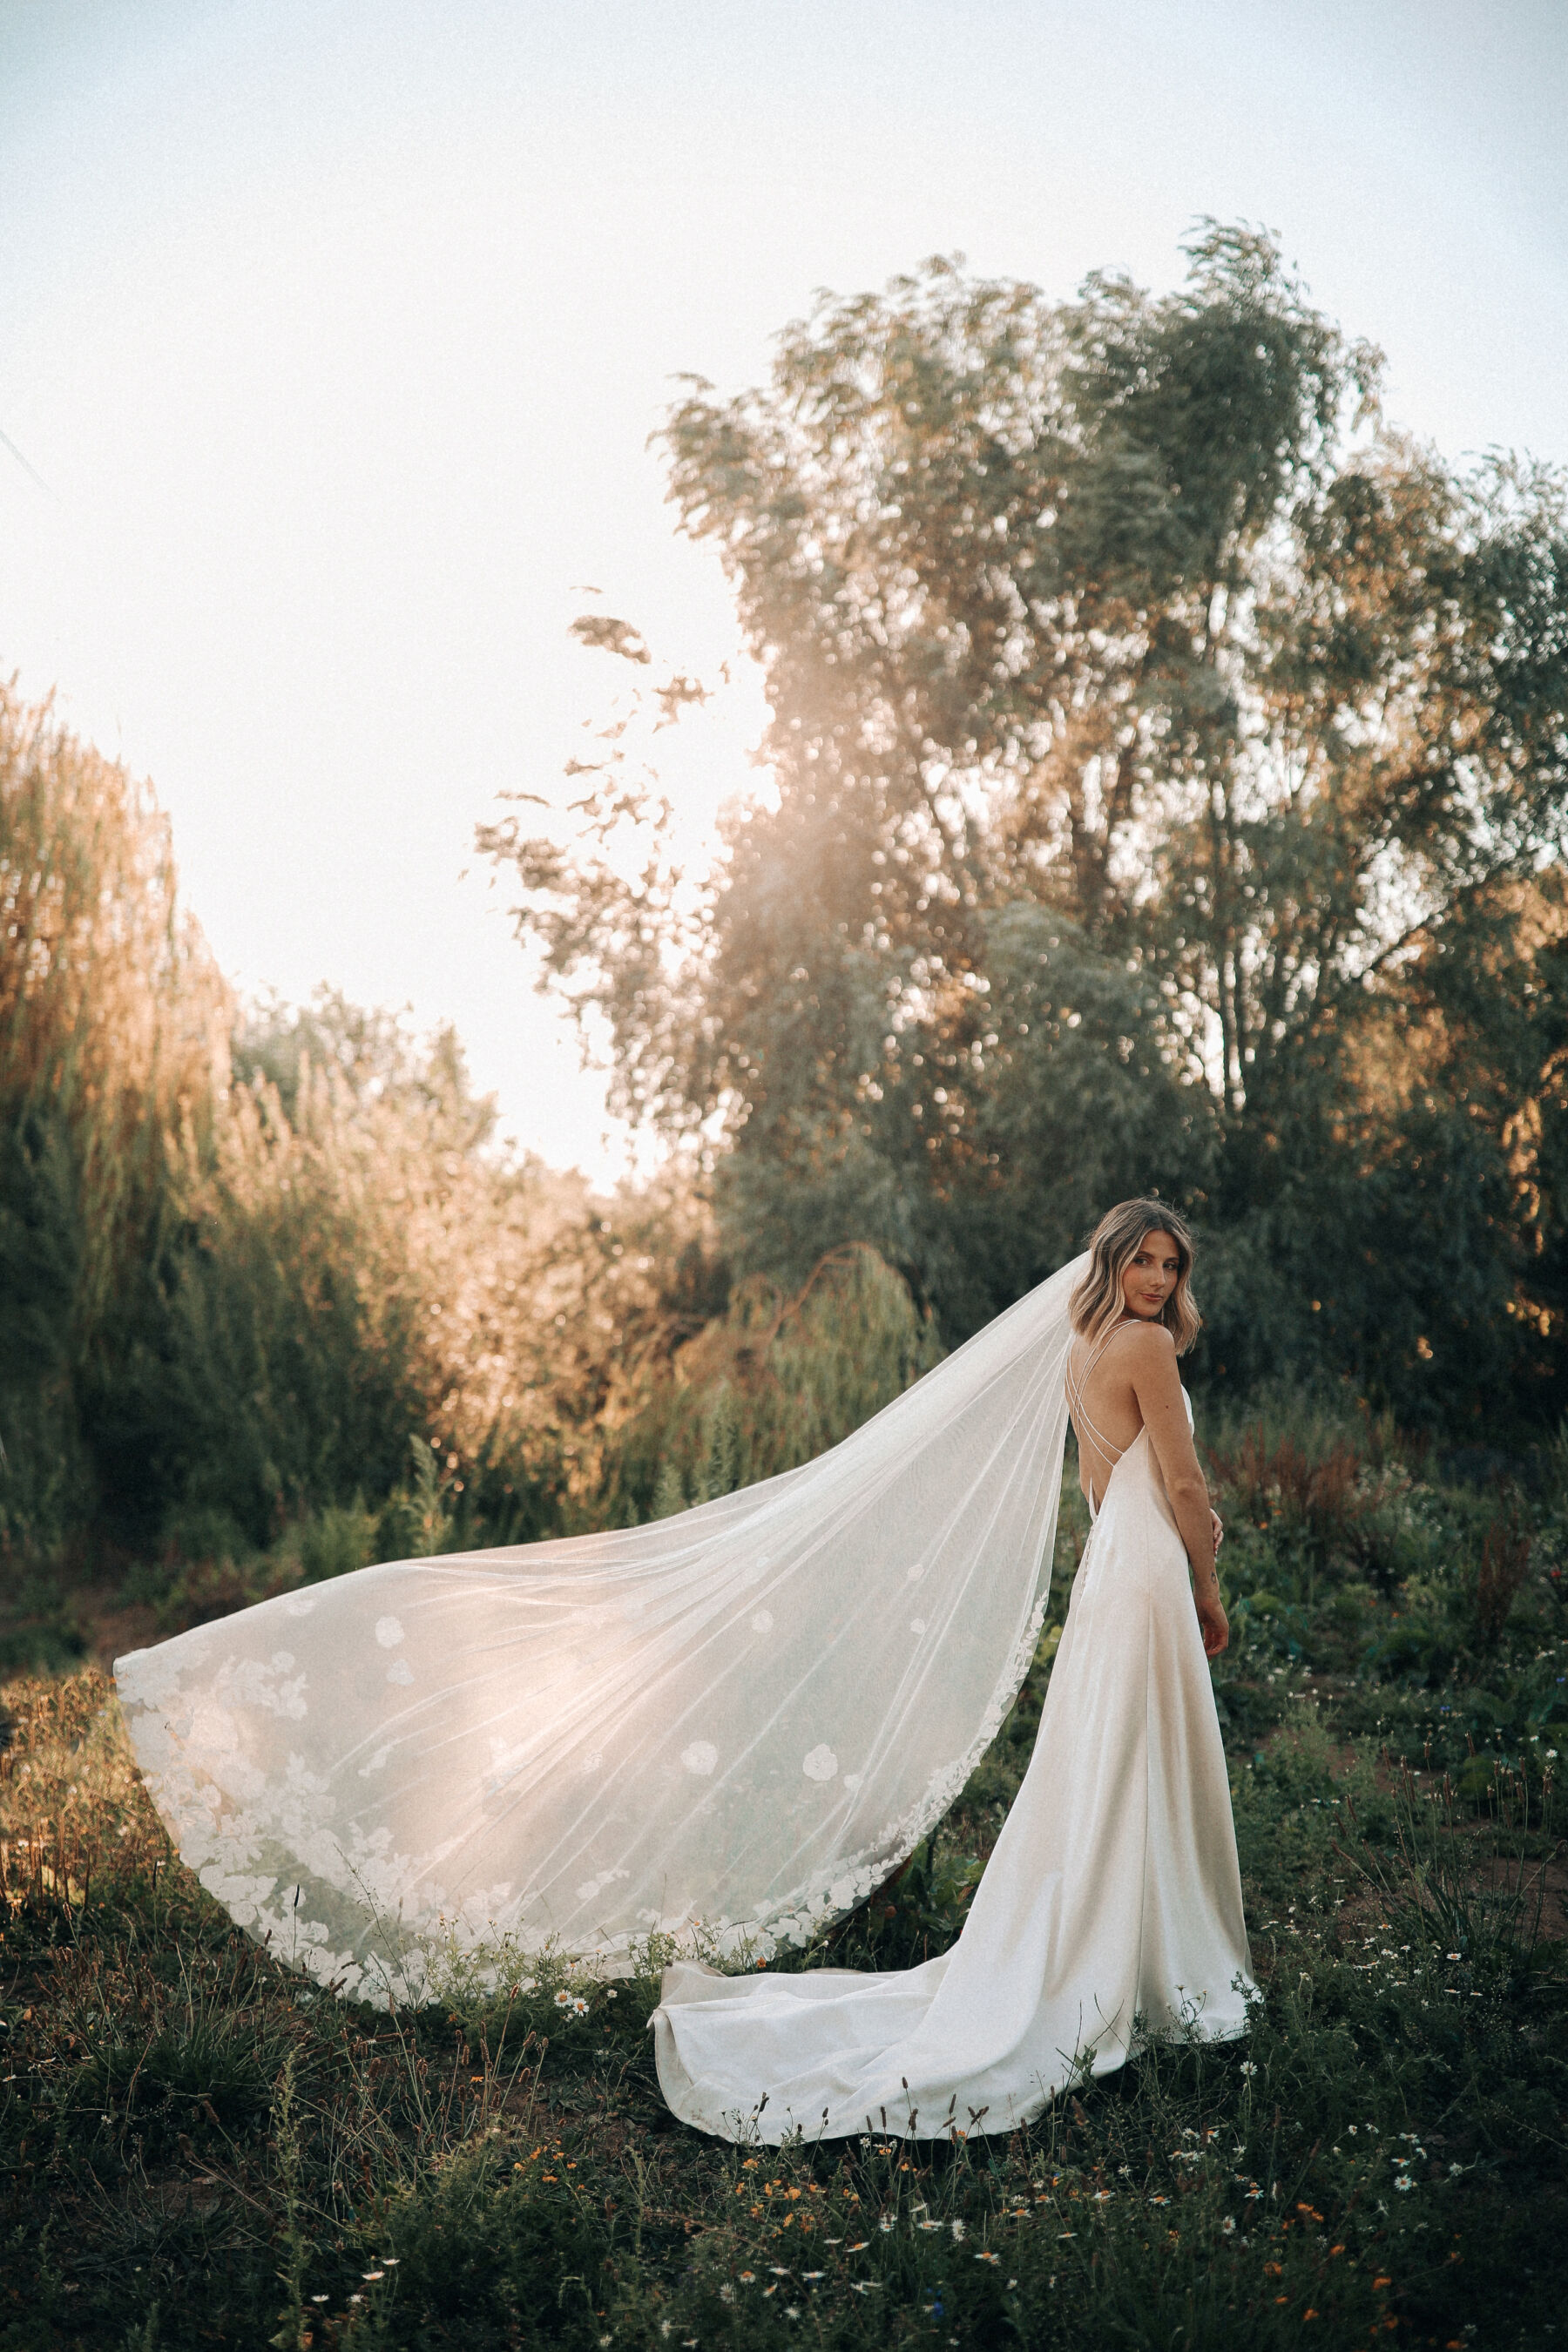 Megan Gilbride wearing Andrea Hawkes Bridal sustainable wedding dress